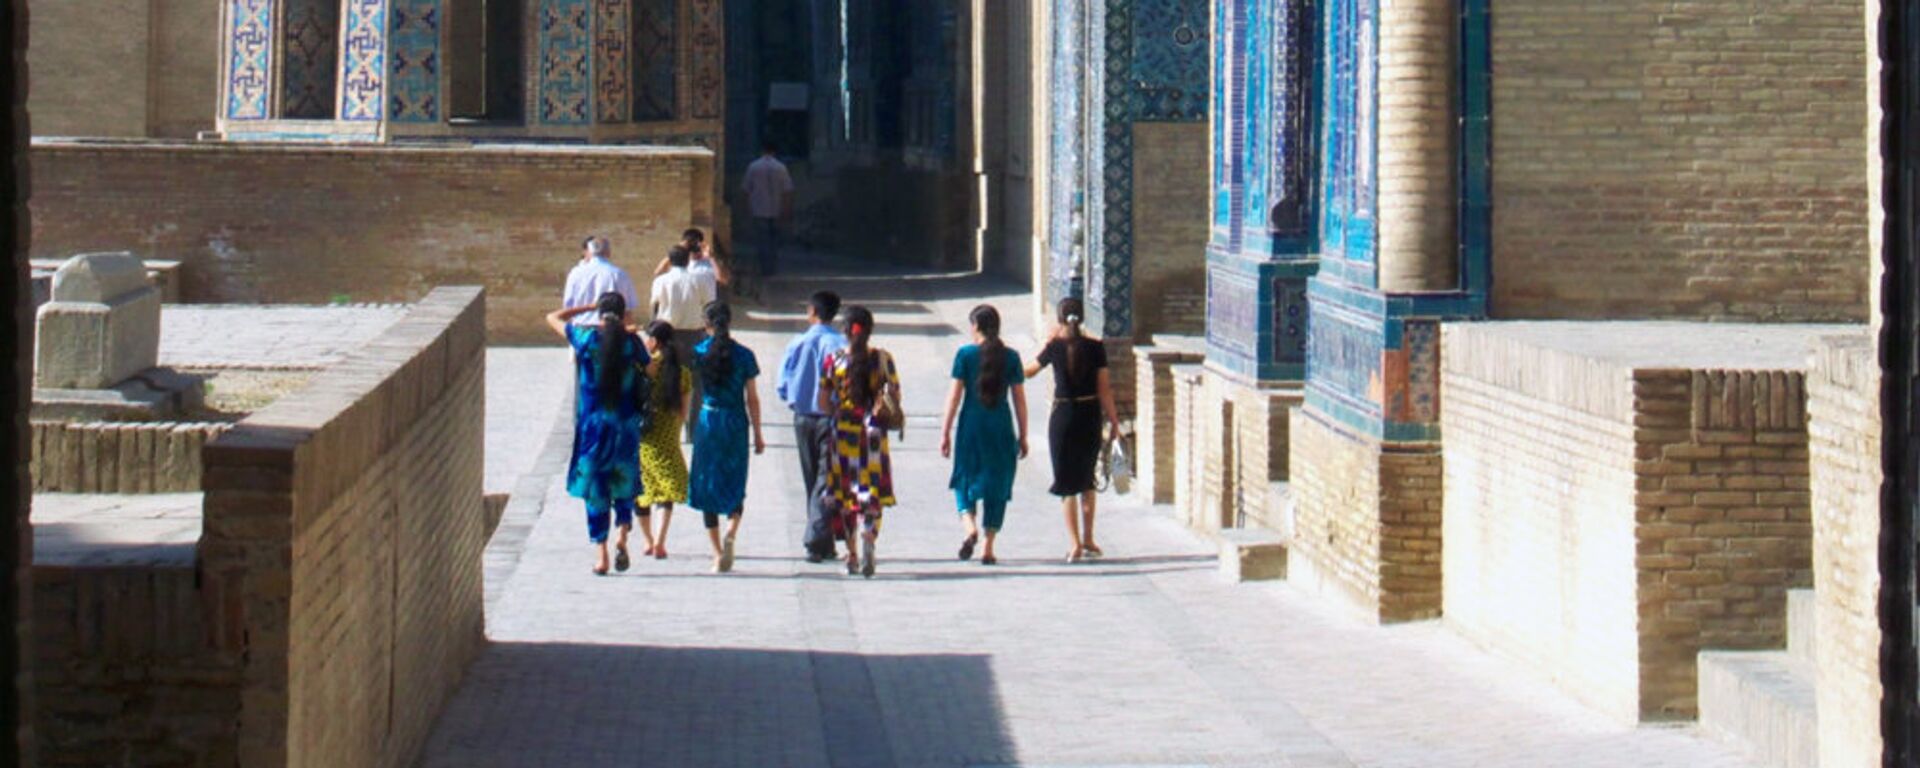 Туристы прогуливаются в Самарканде, Узбекистан - Sputnik Узбекистан, 1920, 30.03.2021